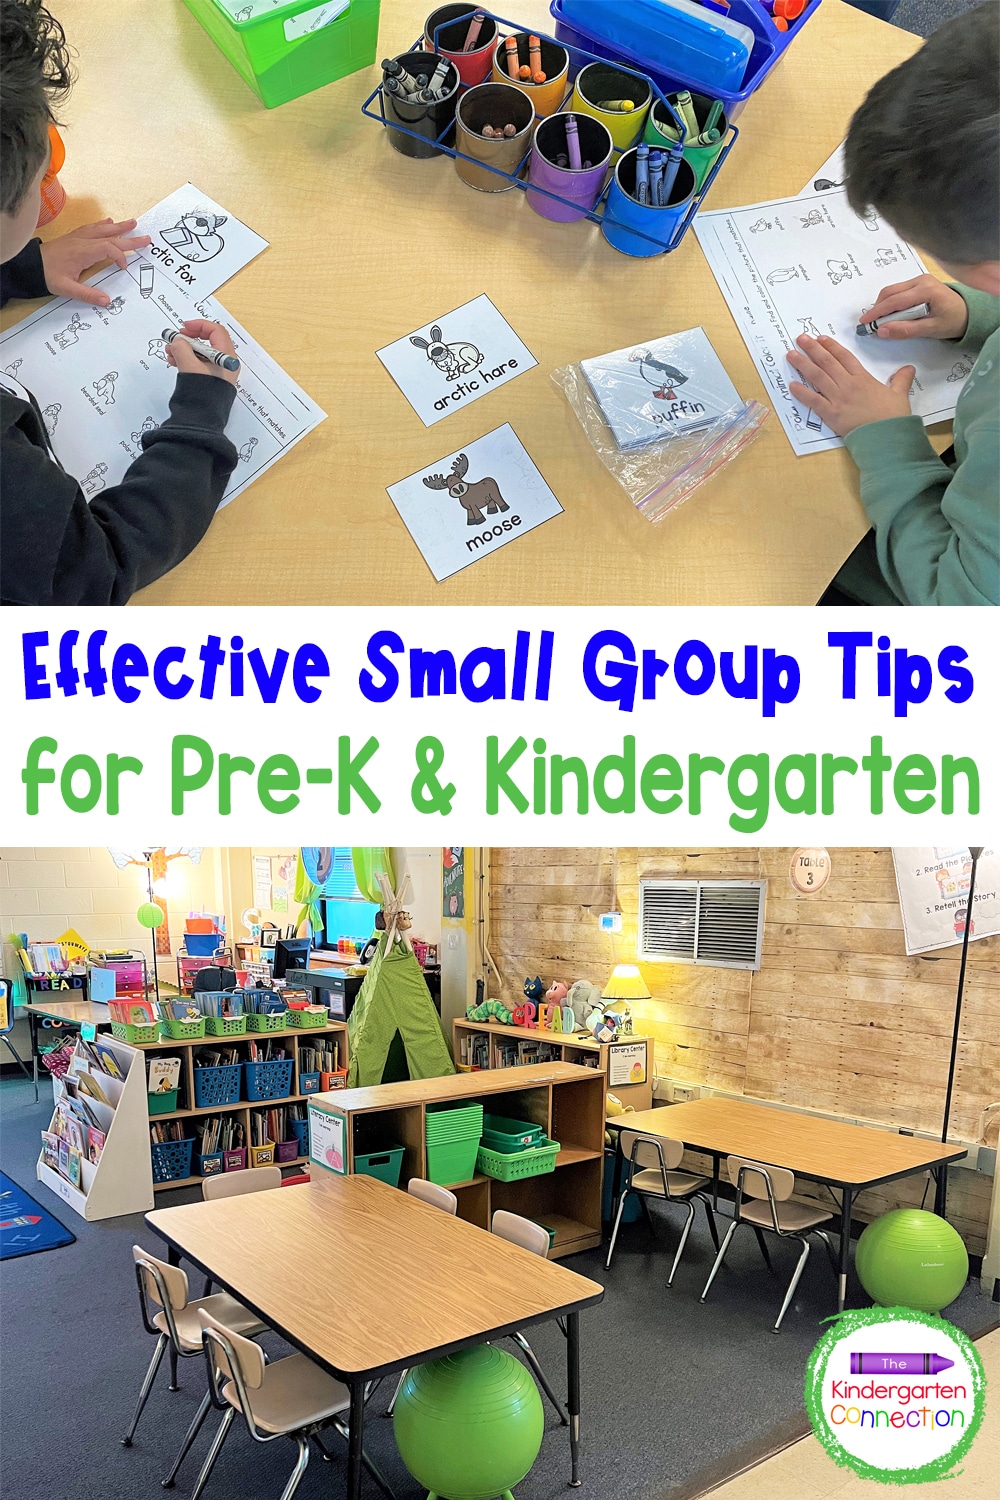 3 Effective Small Group Tips for Pre-K & Kindergarten